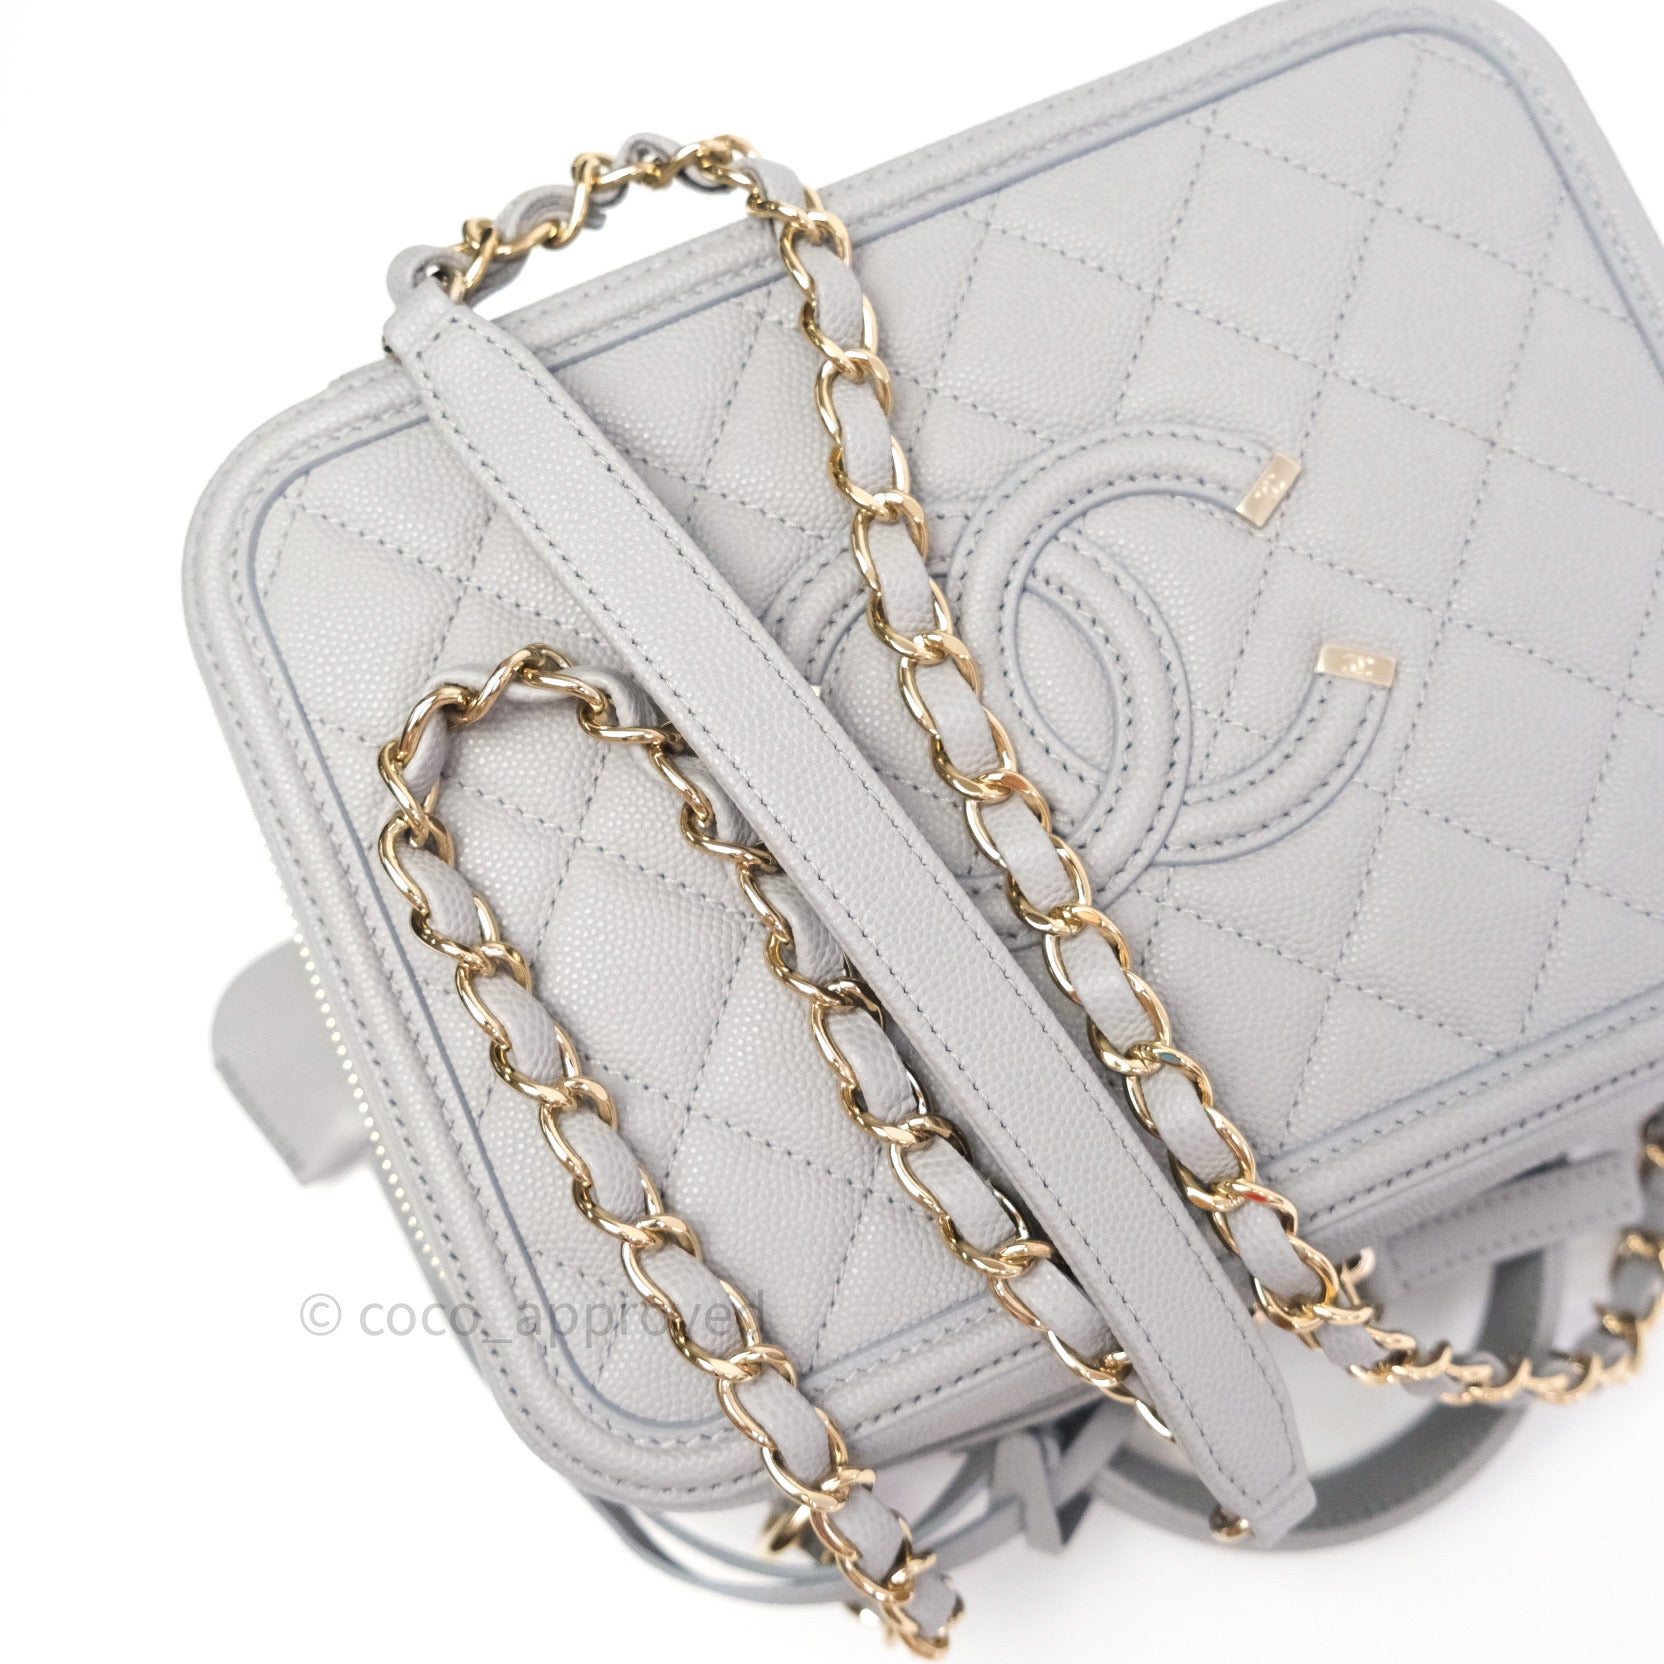 Chanel Quilted Medium CC Filigree Vanity Case Grey Caviar Light